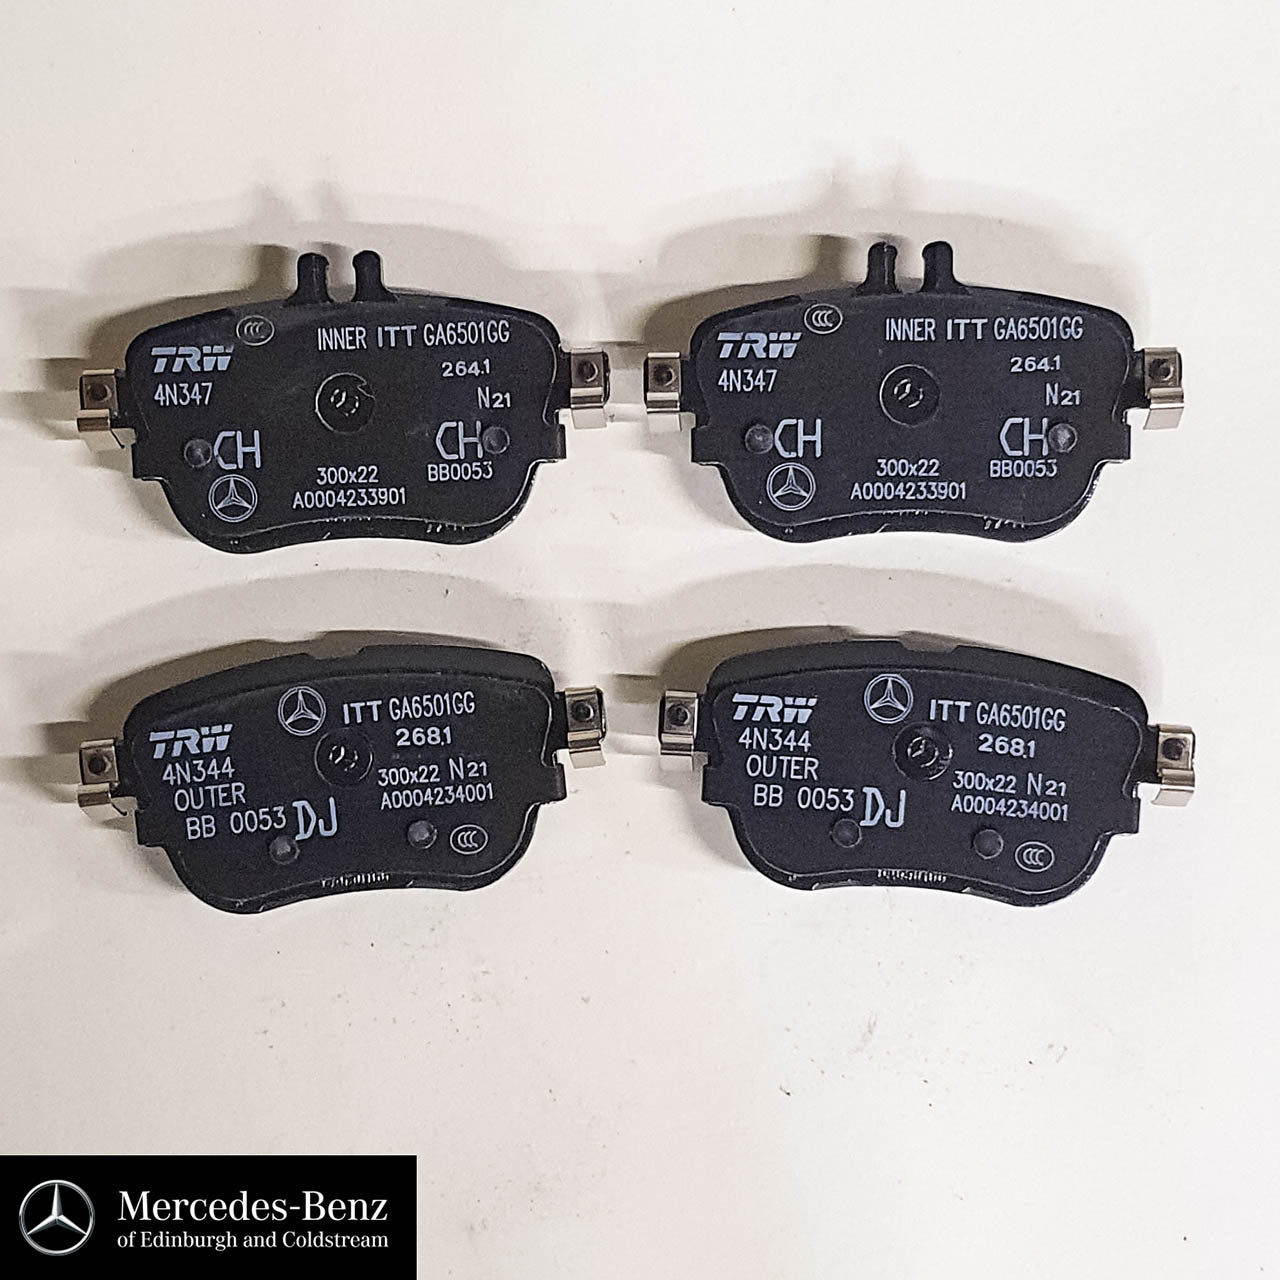 Genuine Mercedes-Benz brake pads and wear sensor - Rear - E Class W213 C238 C257